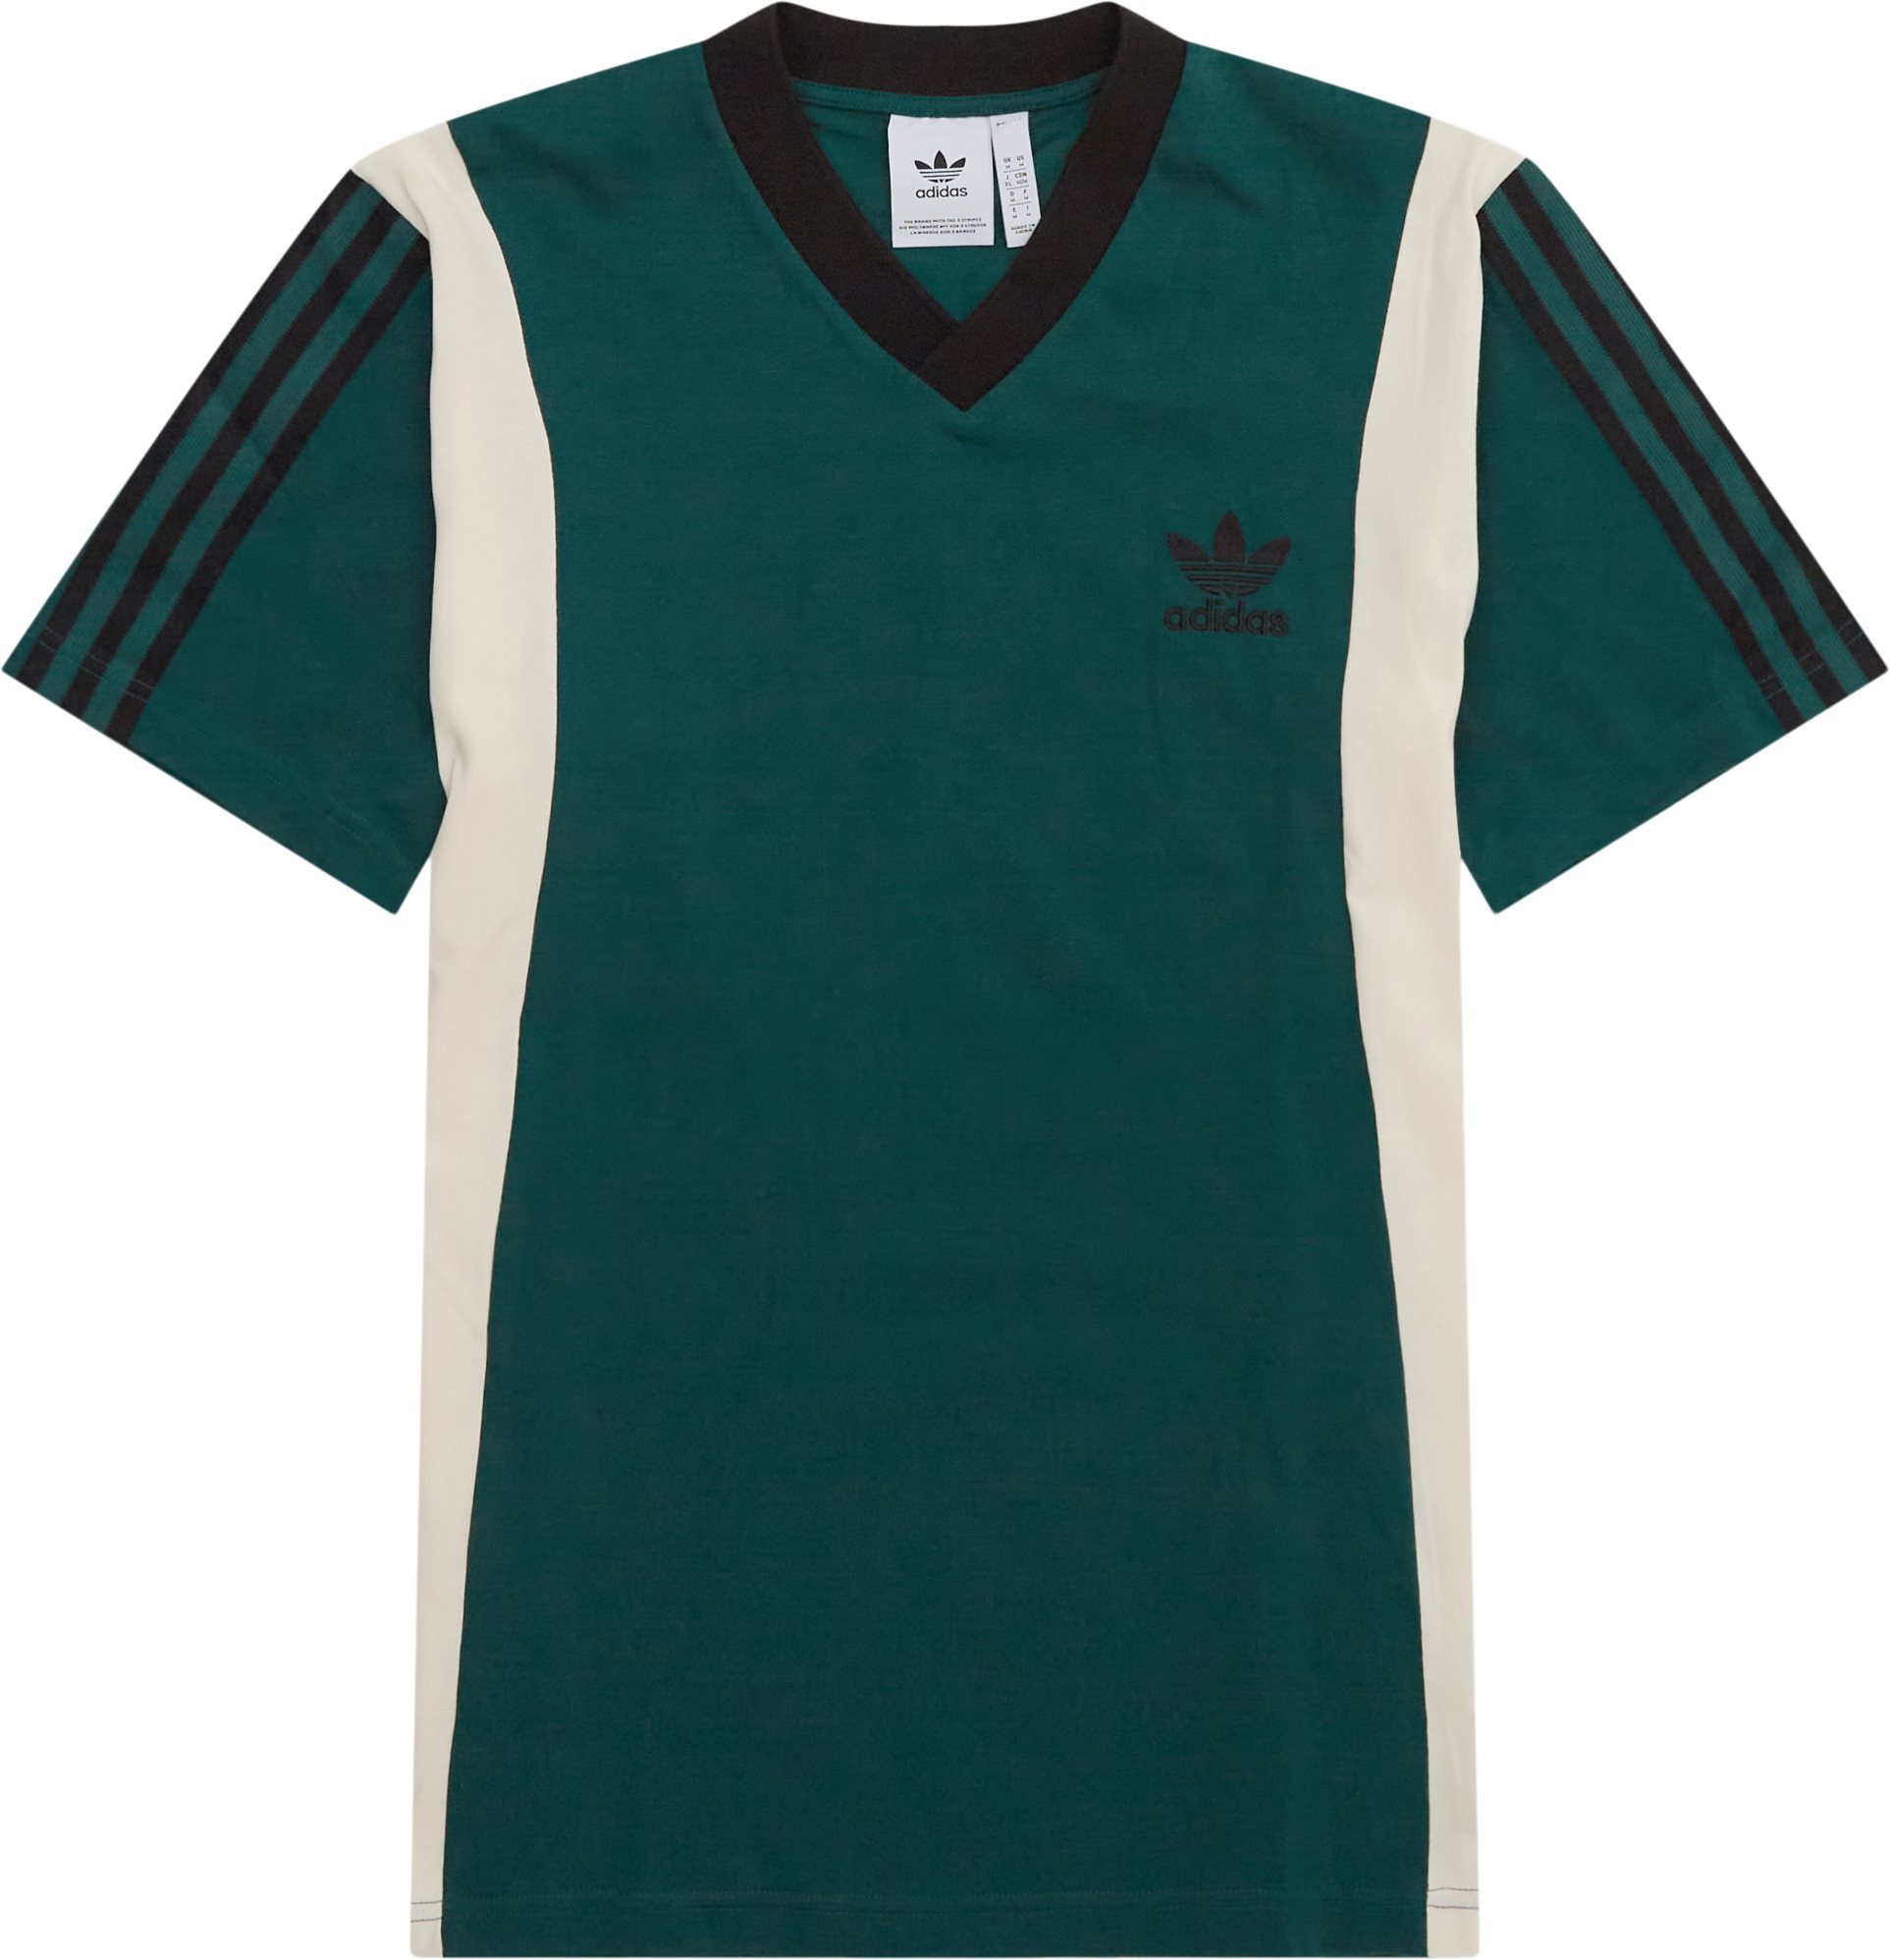 Adidas Originals T-shirts ARCHIVE TEE IS1406 Grøn